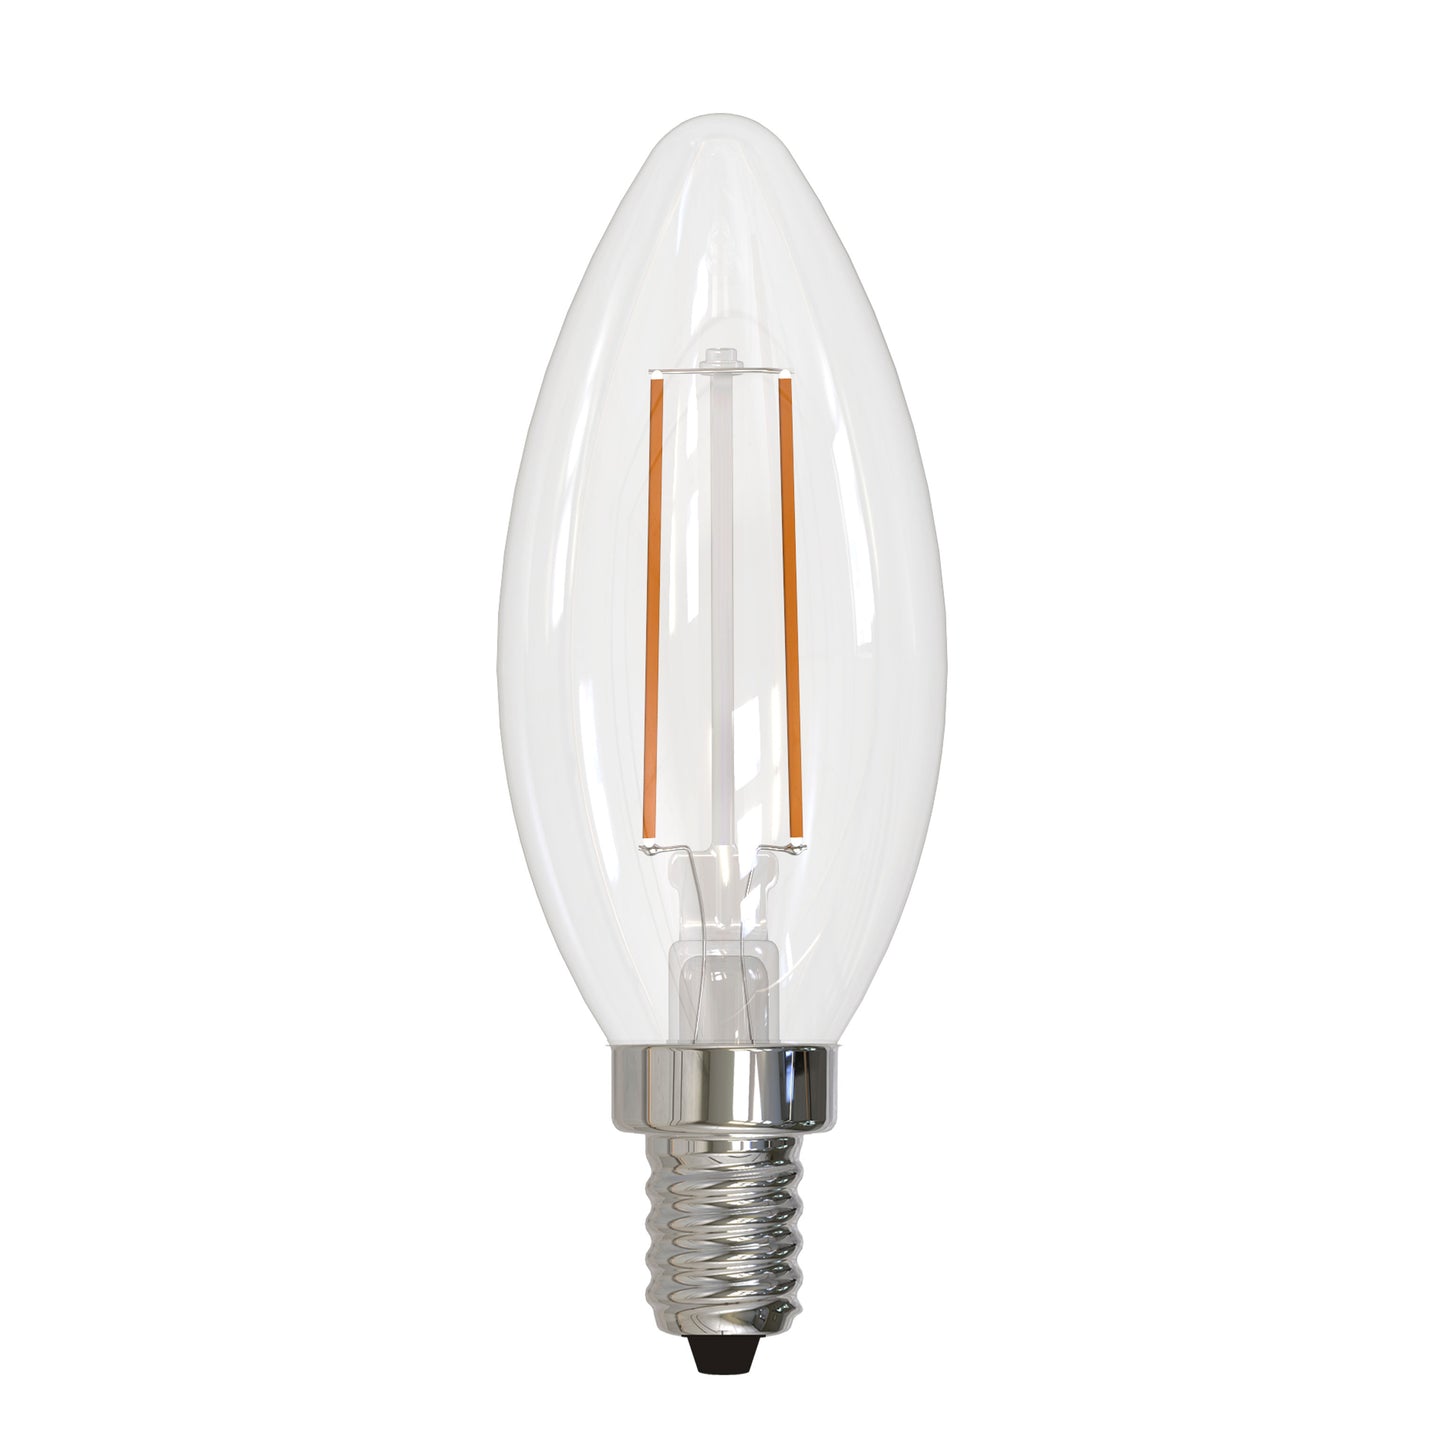 776699 - Filaments Dimmable B11 LED Light Bulb - 4 Watt - 4000K - 8 Pack